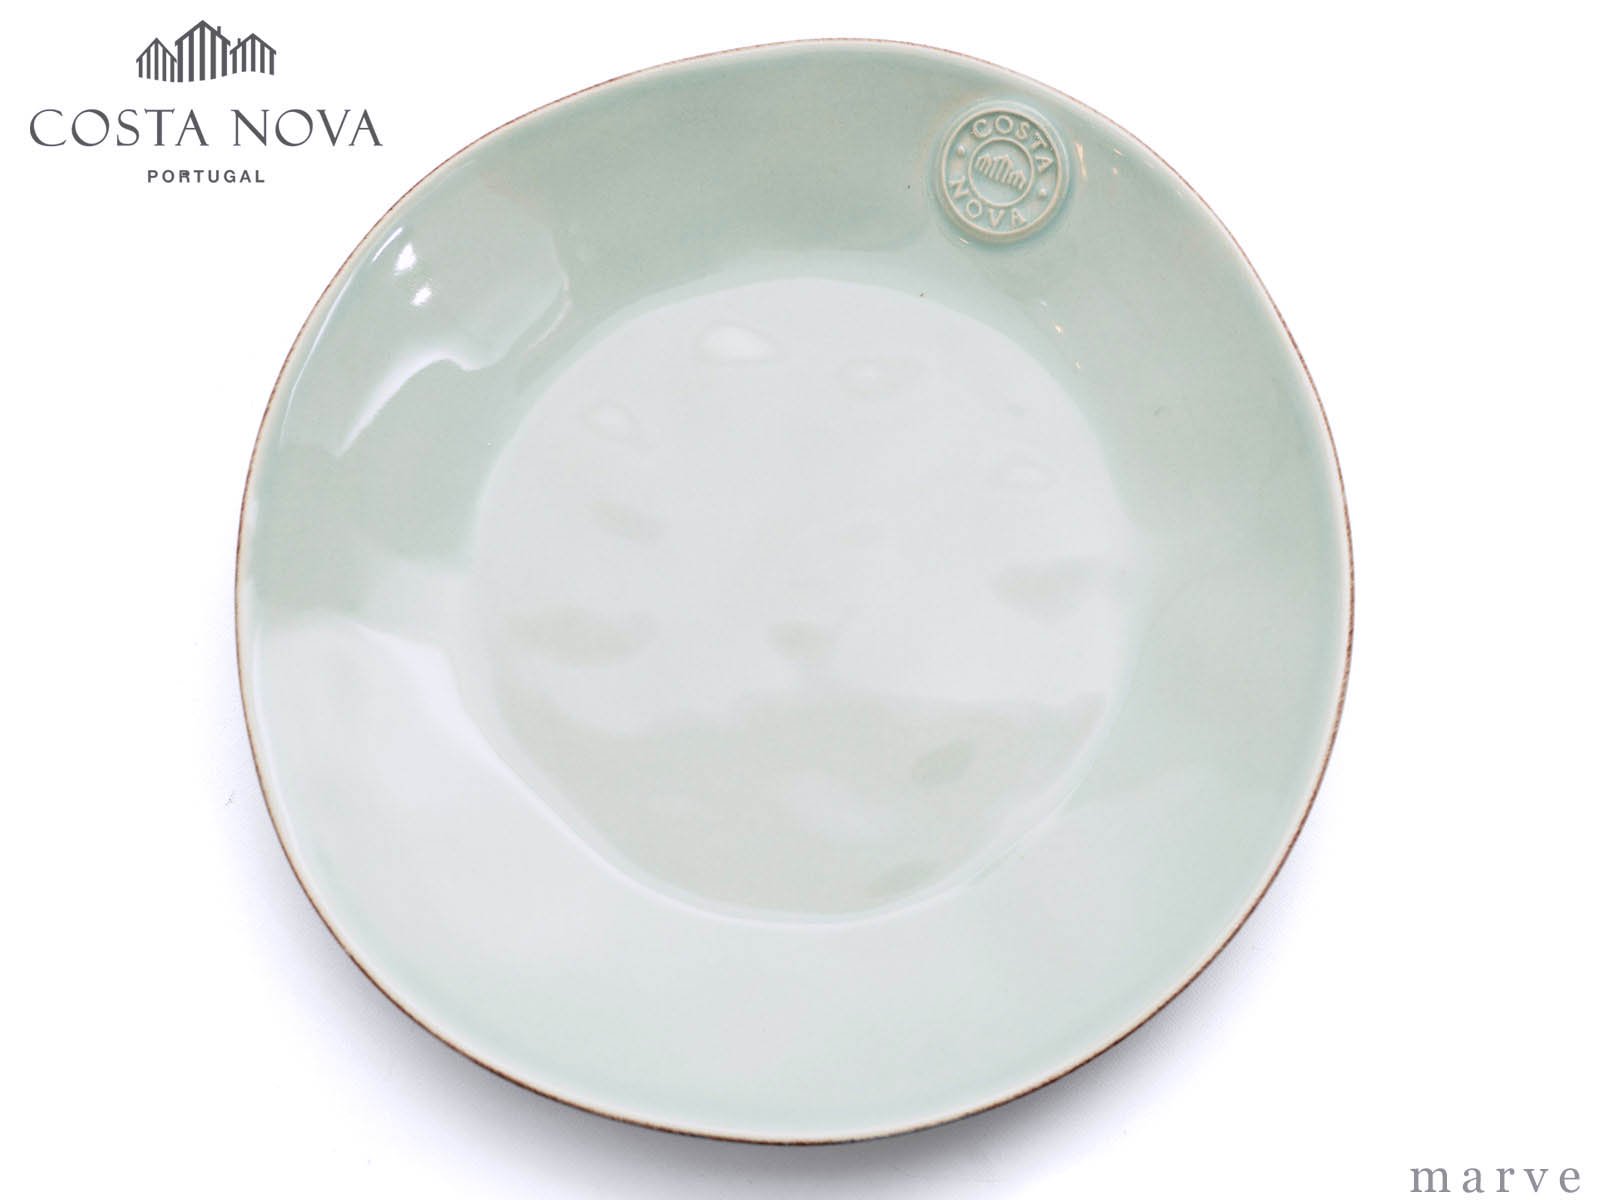 COSTA NOVA(コスタ・ノバ) ノバ ディナープレート ターコイズ - marve (マーヴェ) ナチュラルモダン雑貨 通販 キッチン テーブル ウェア インテリア